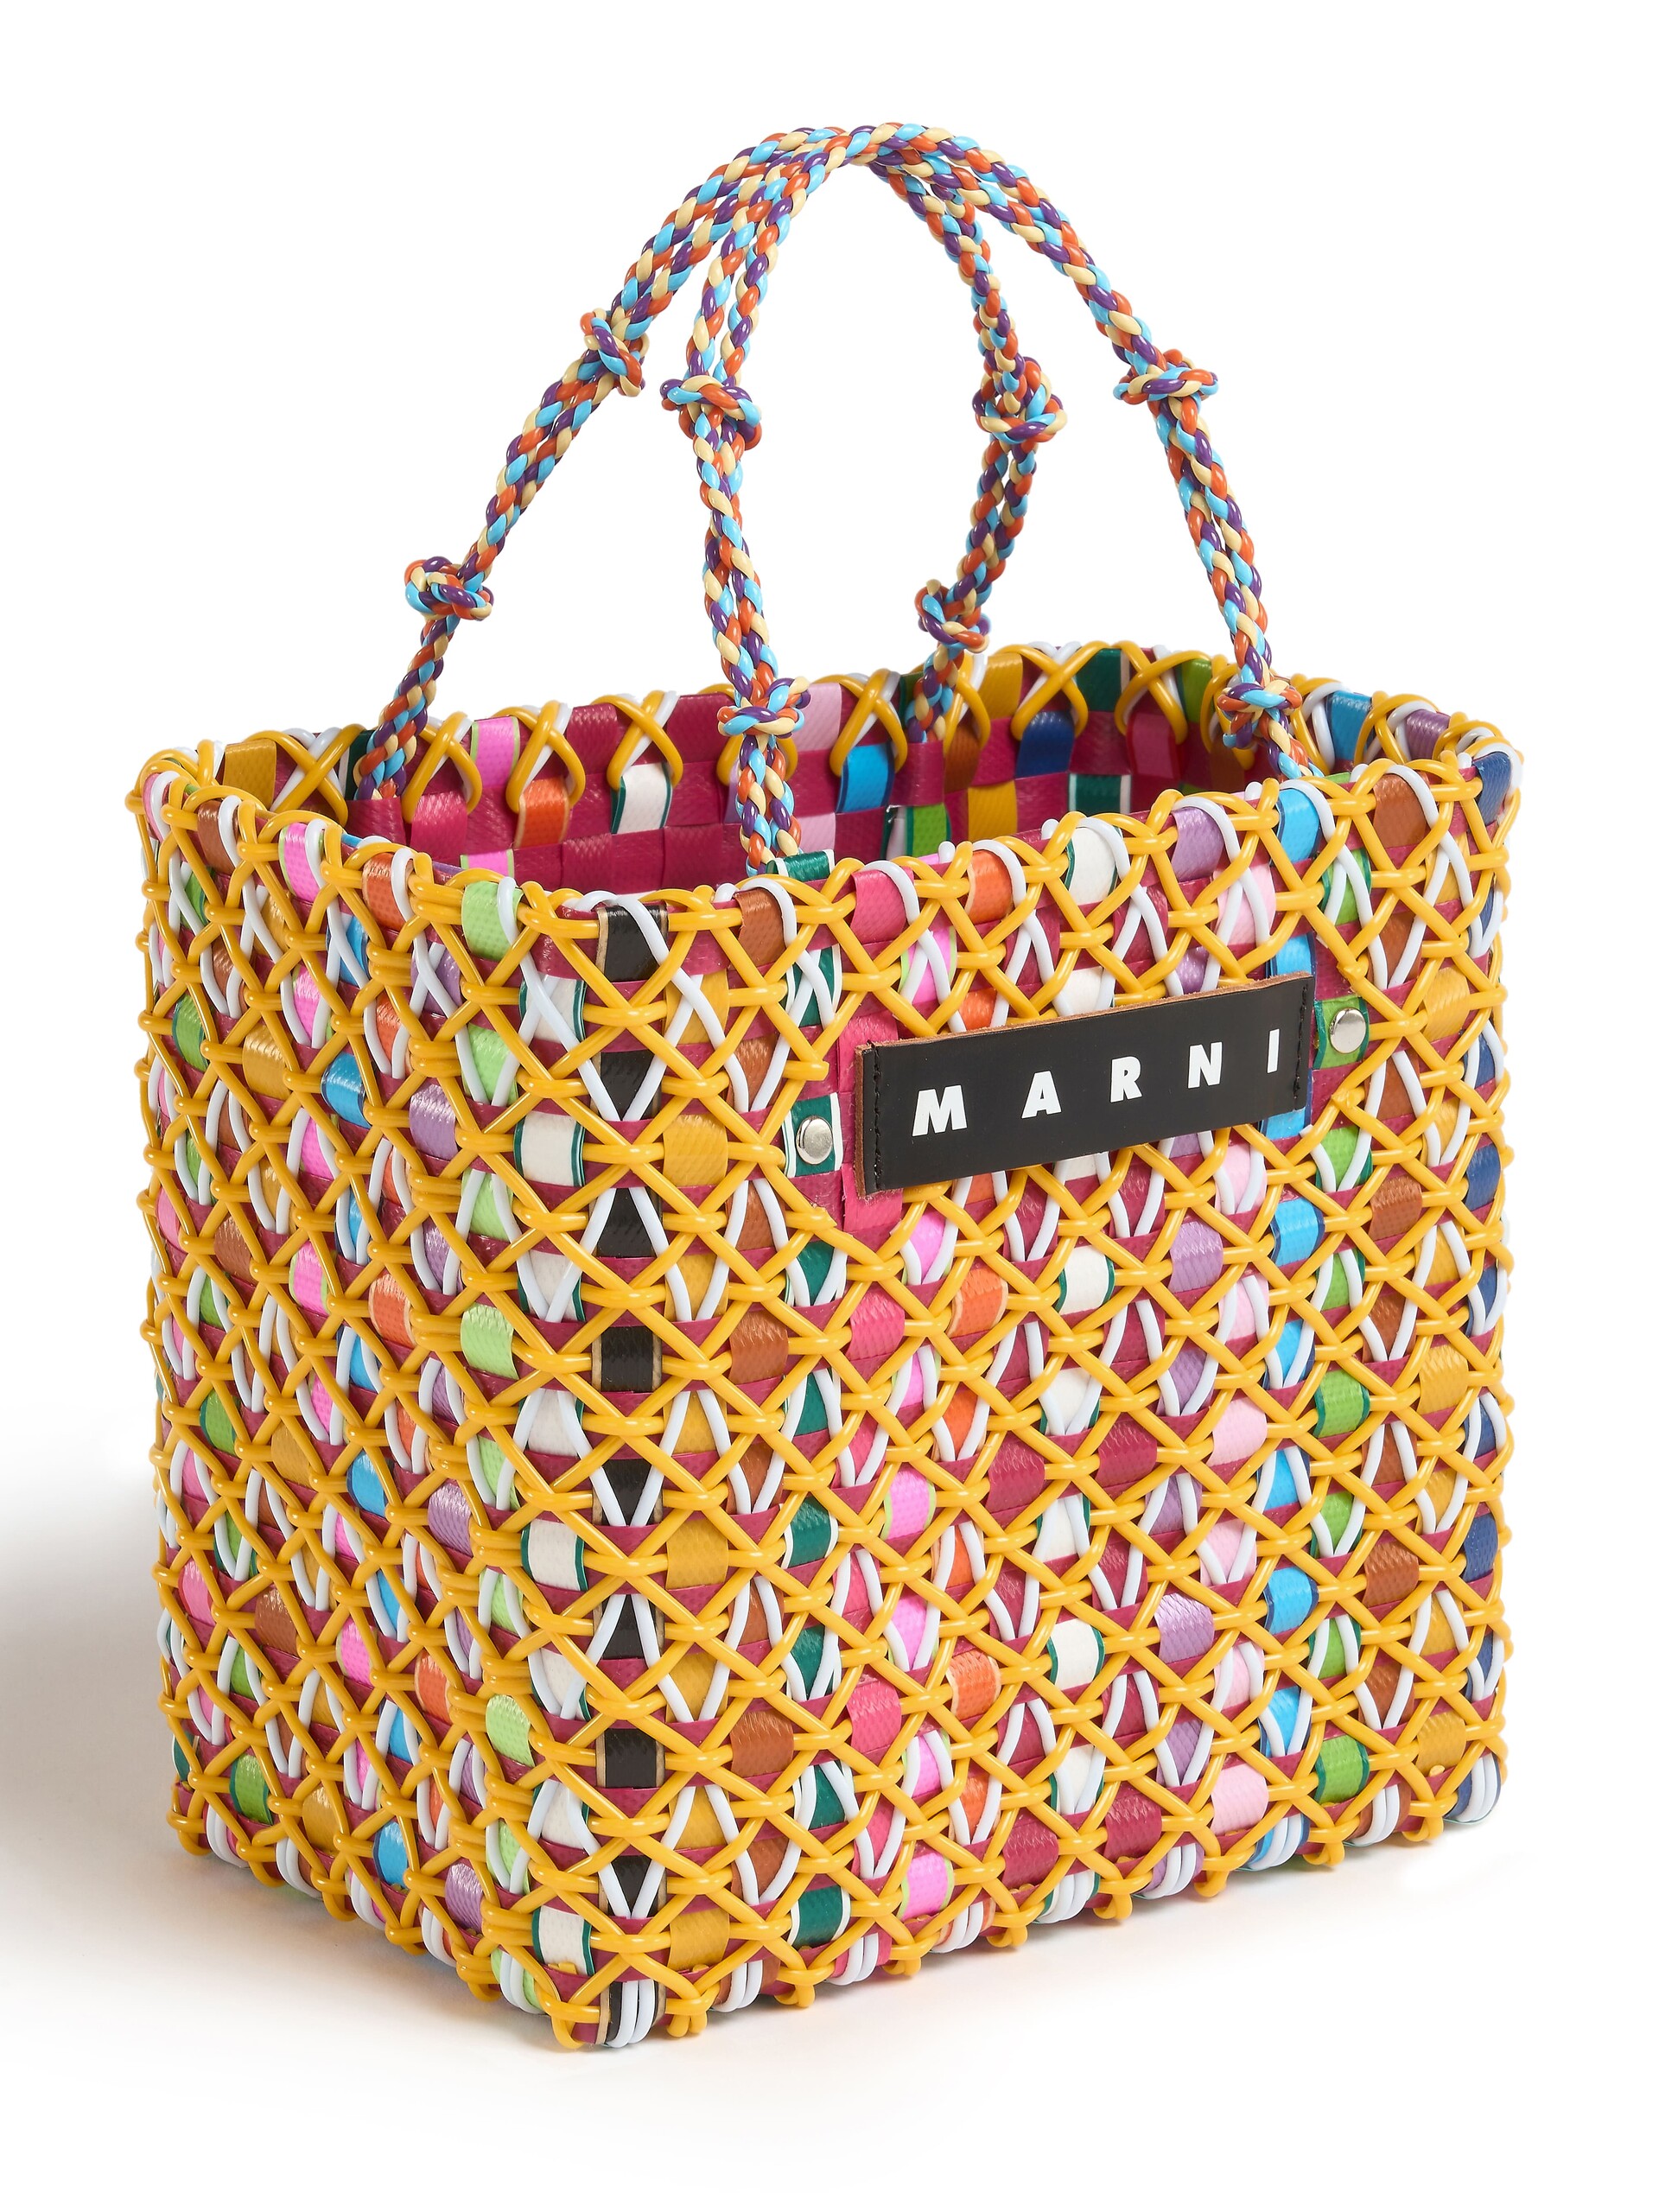 Blue MARNI MARKET CAKE BASKET bag - Shopping Bags - Image 4